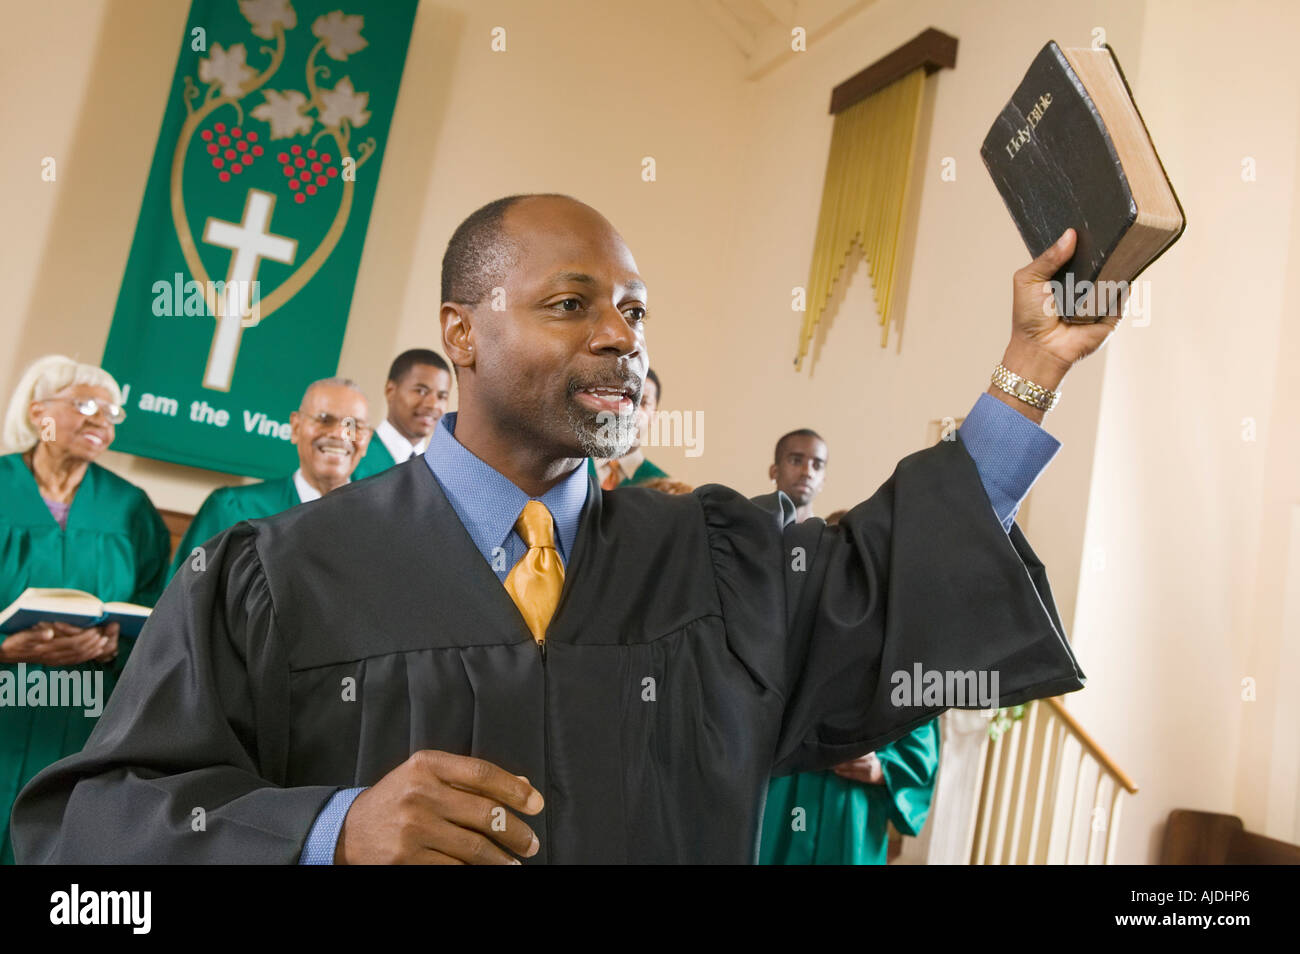 Preacher Preaching the Gospel in church Stock Photo